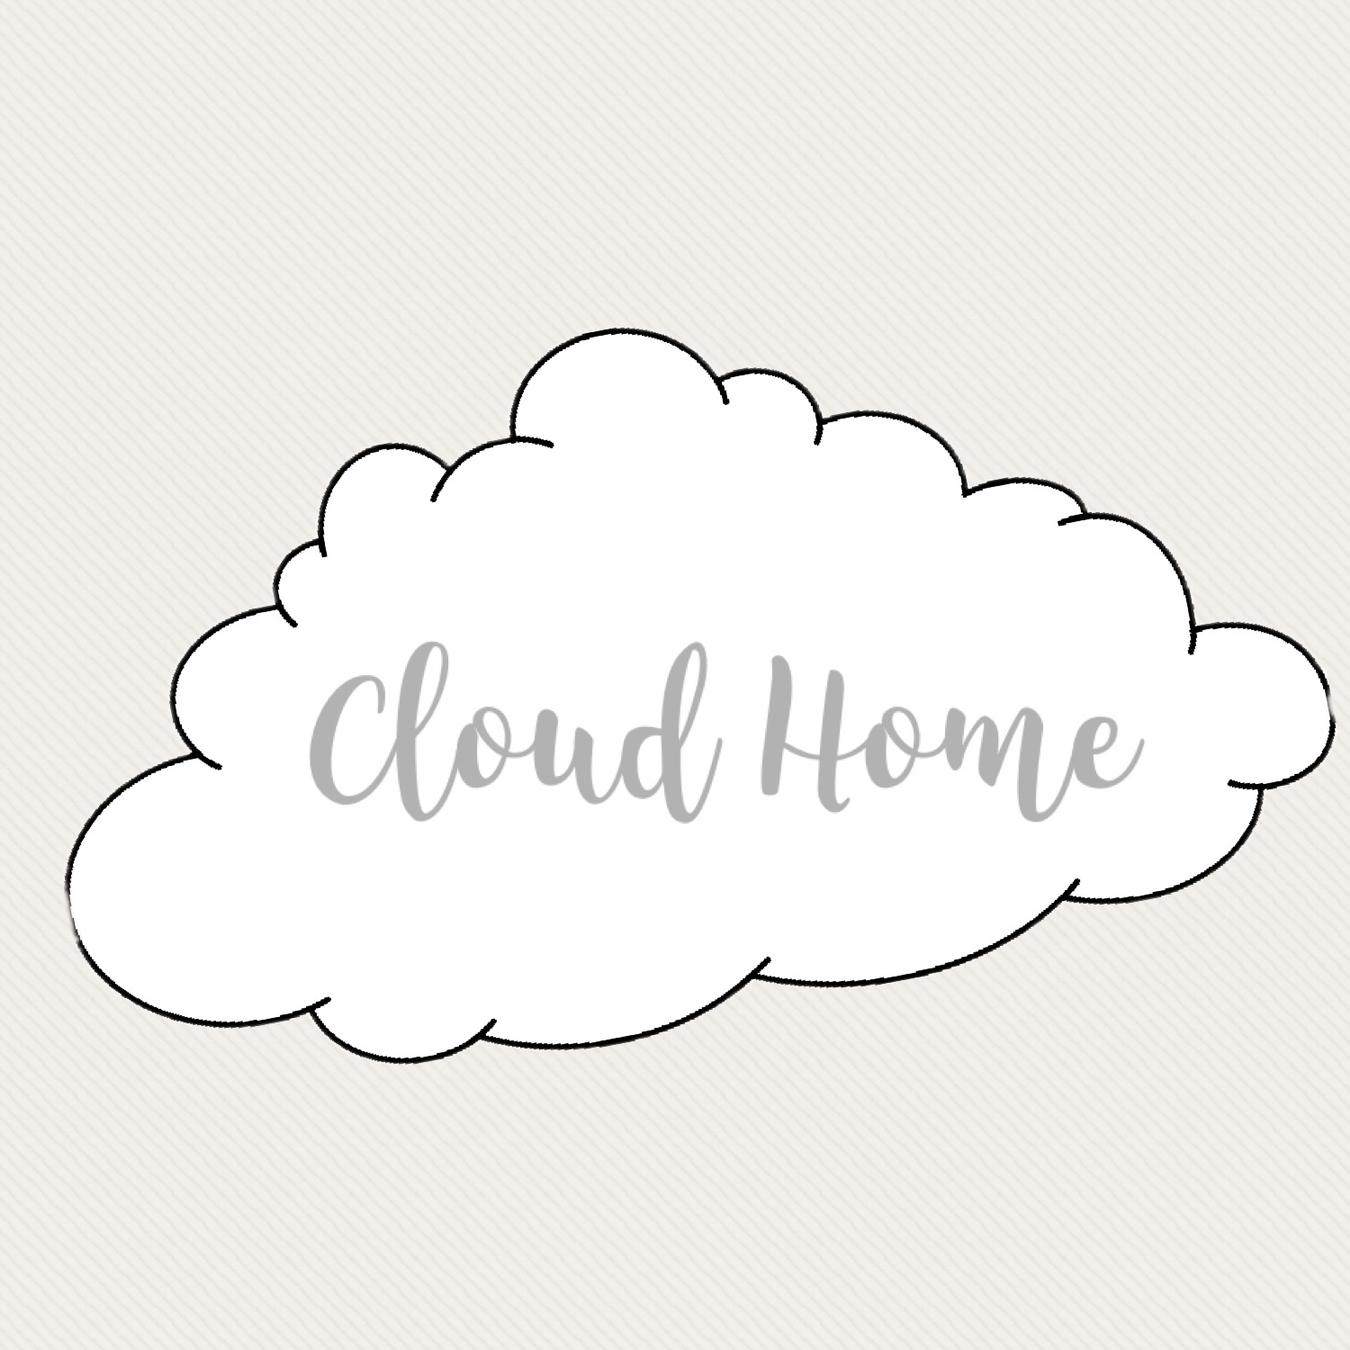 Cloud Home's images